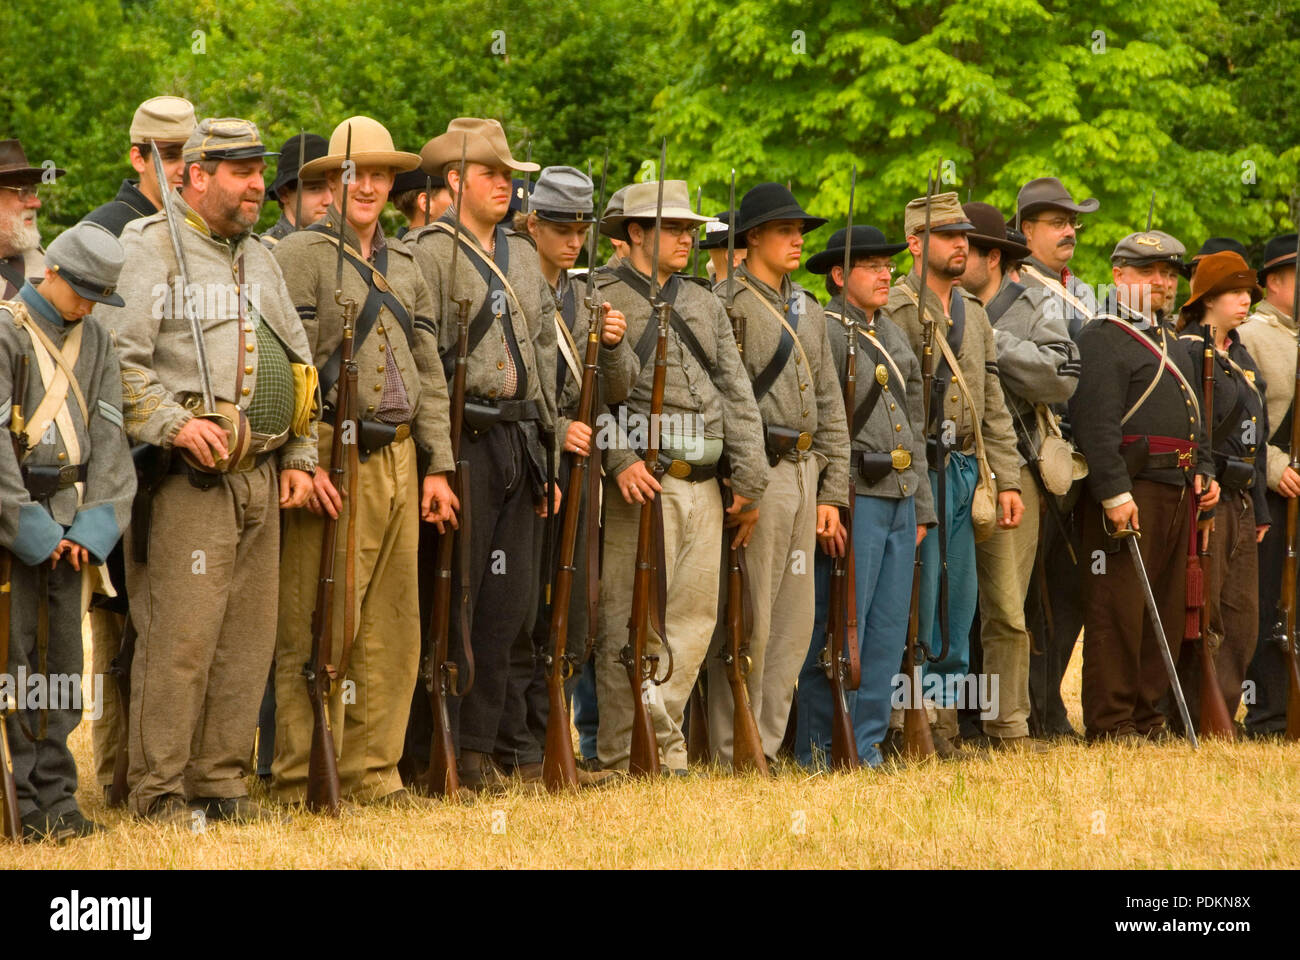 Confederate soldiers, Civil War Re-enactment, Willamette Mission State Park, Oregon Stock Photo